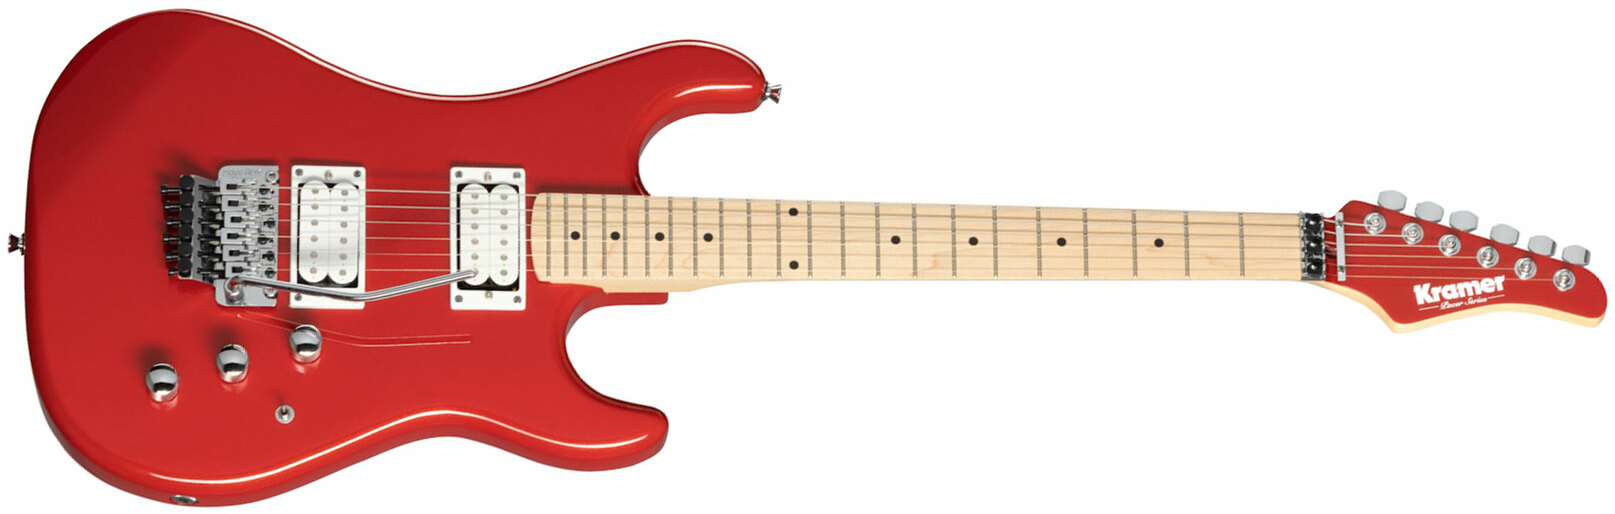 Kramer Pacer Classic 2h Fr Mn - Scarlet Red Metallic - E-Gitarre in Str-Form - Main picture